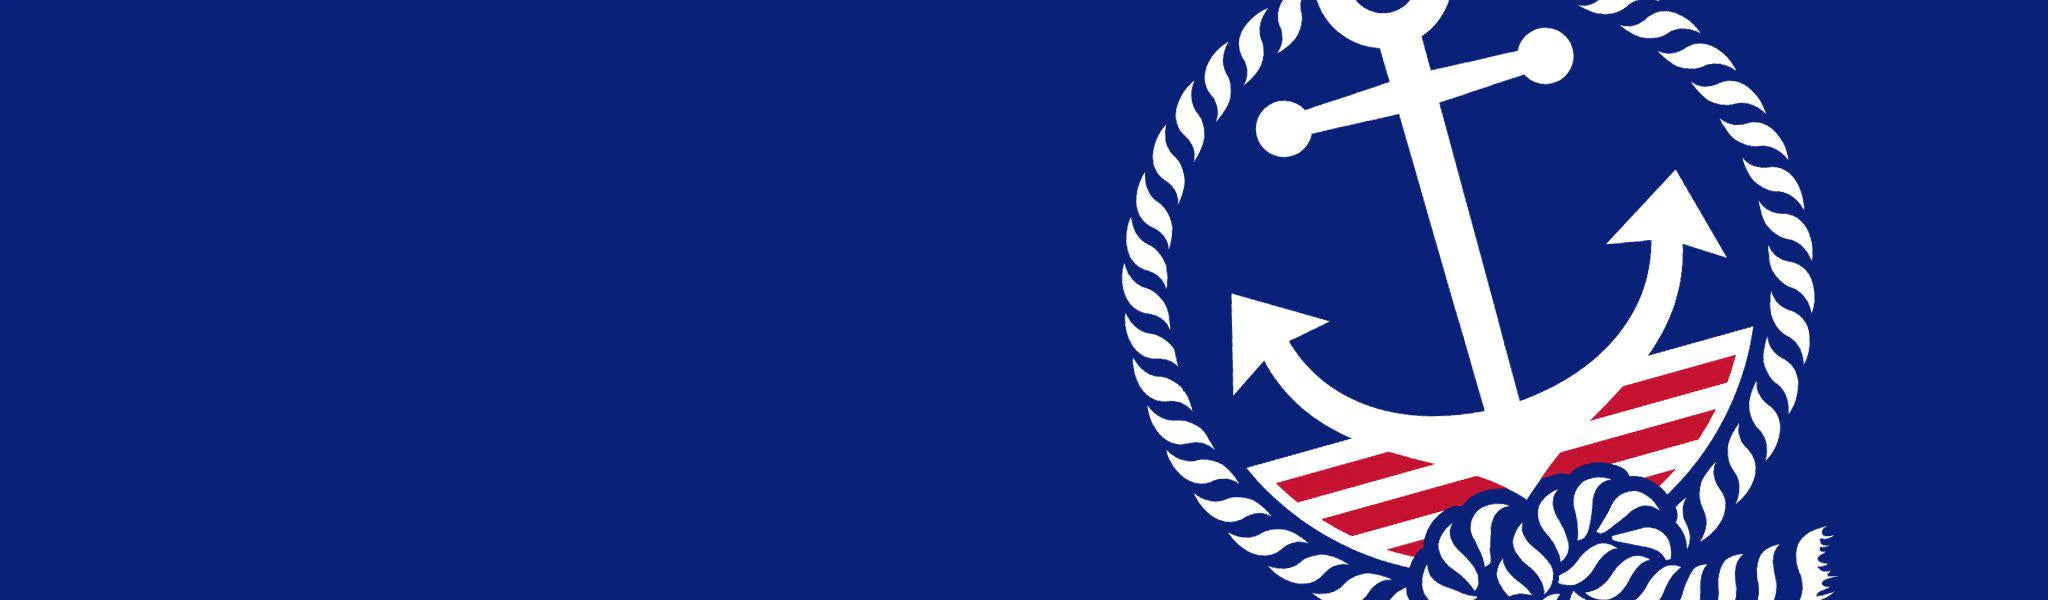 sailor-sailor logo header image